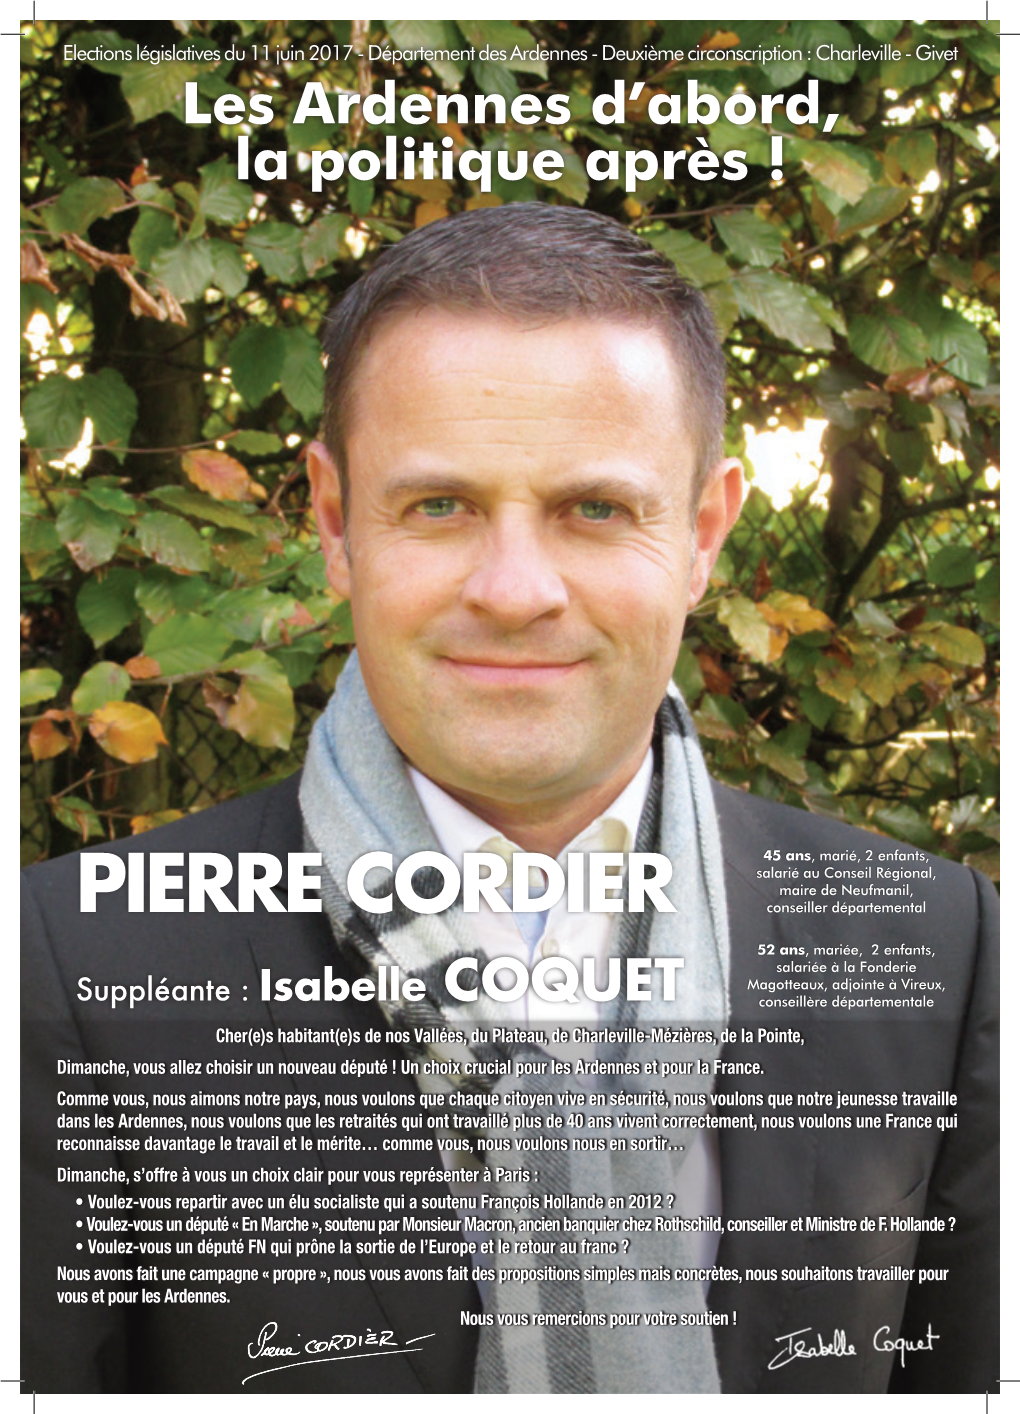 Pierre Cordier